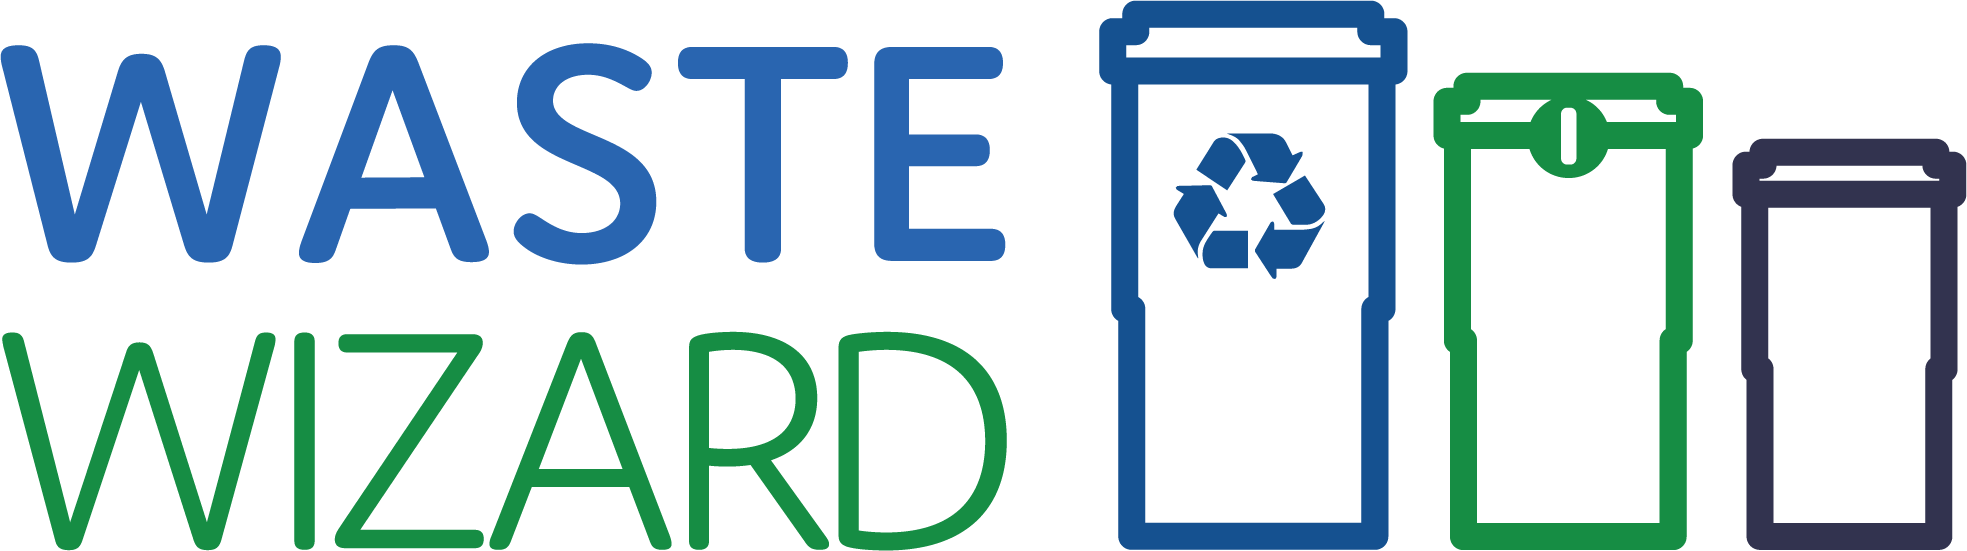 Backslash and Blue Box Logo - Waste Wizard – City of Toronto